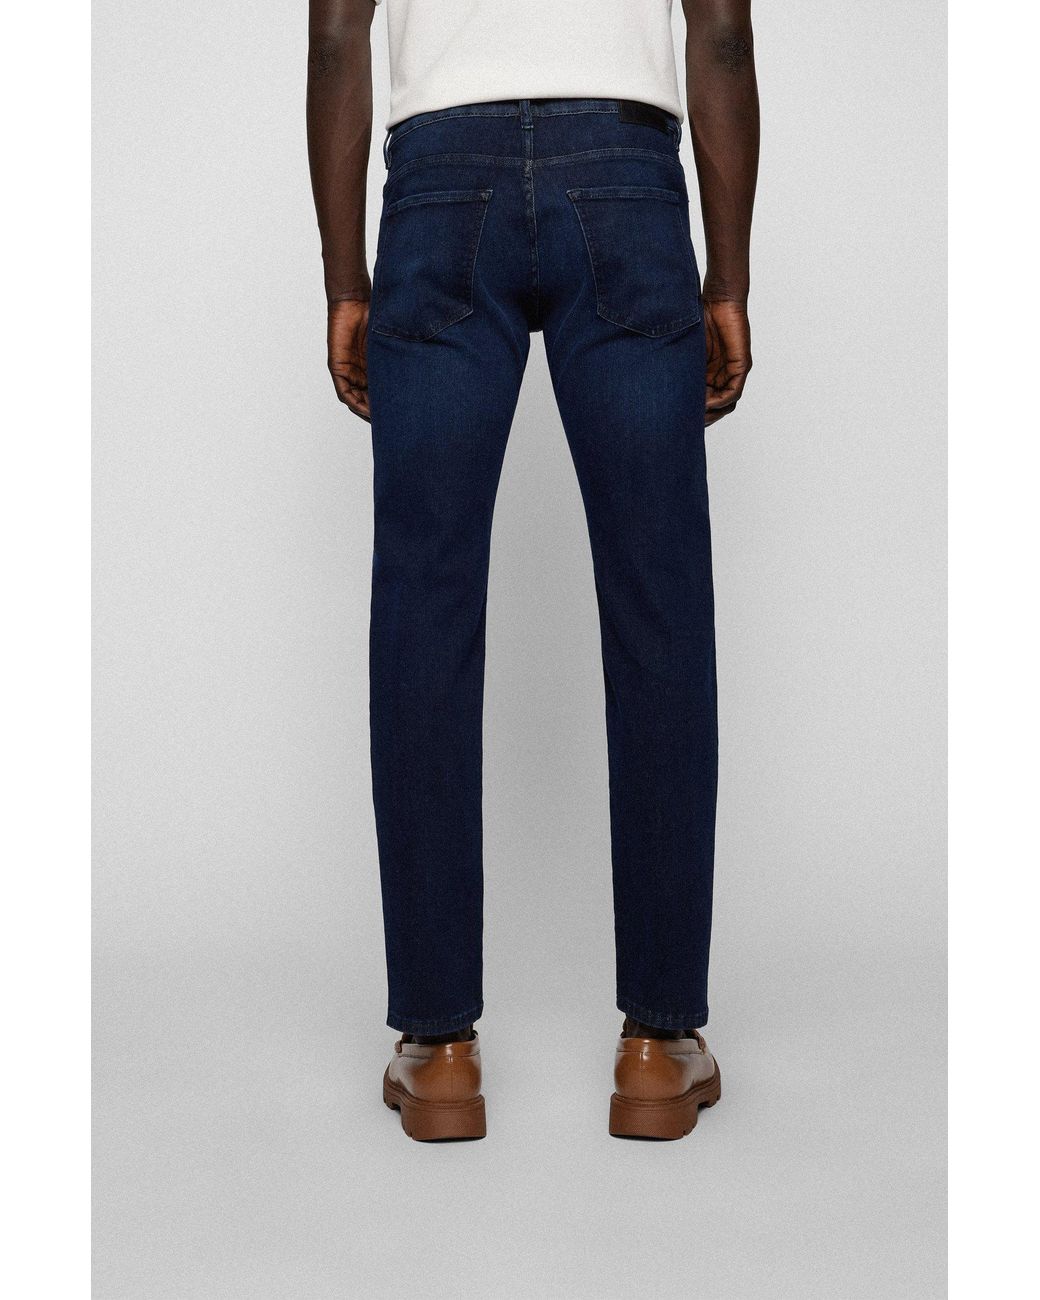 BOSS by HUGO BOSS Slim-fit Jeans In Dark-blue Super-stretch Denim for Men |  Lyst Australia